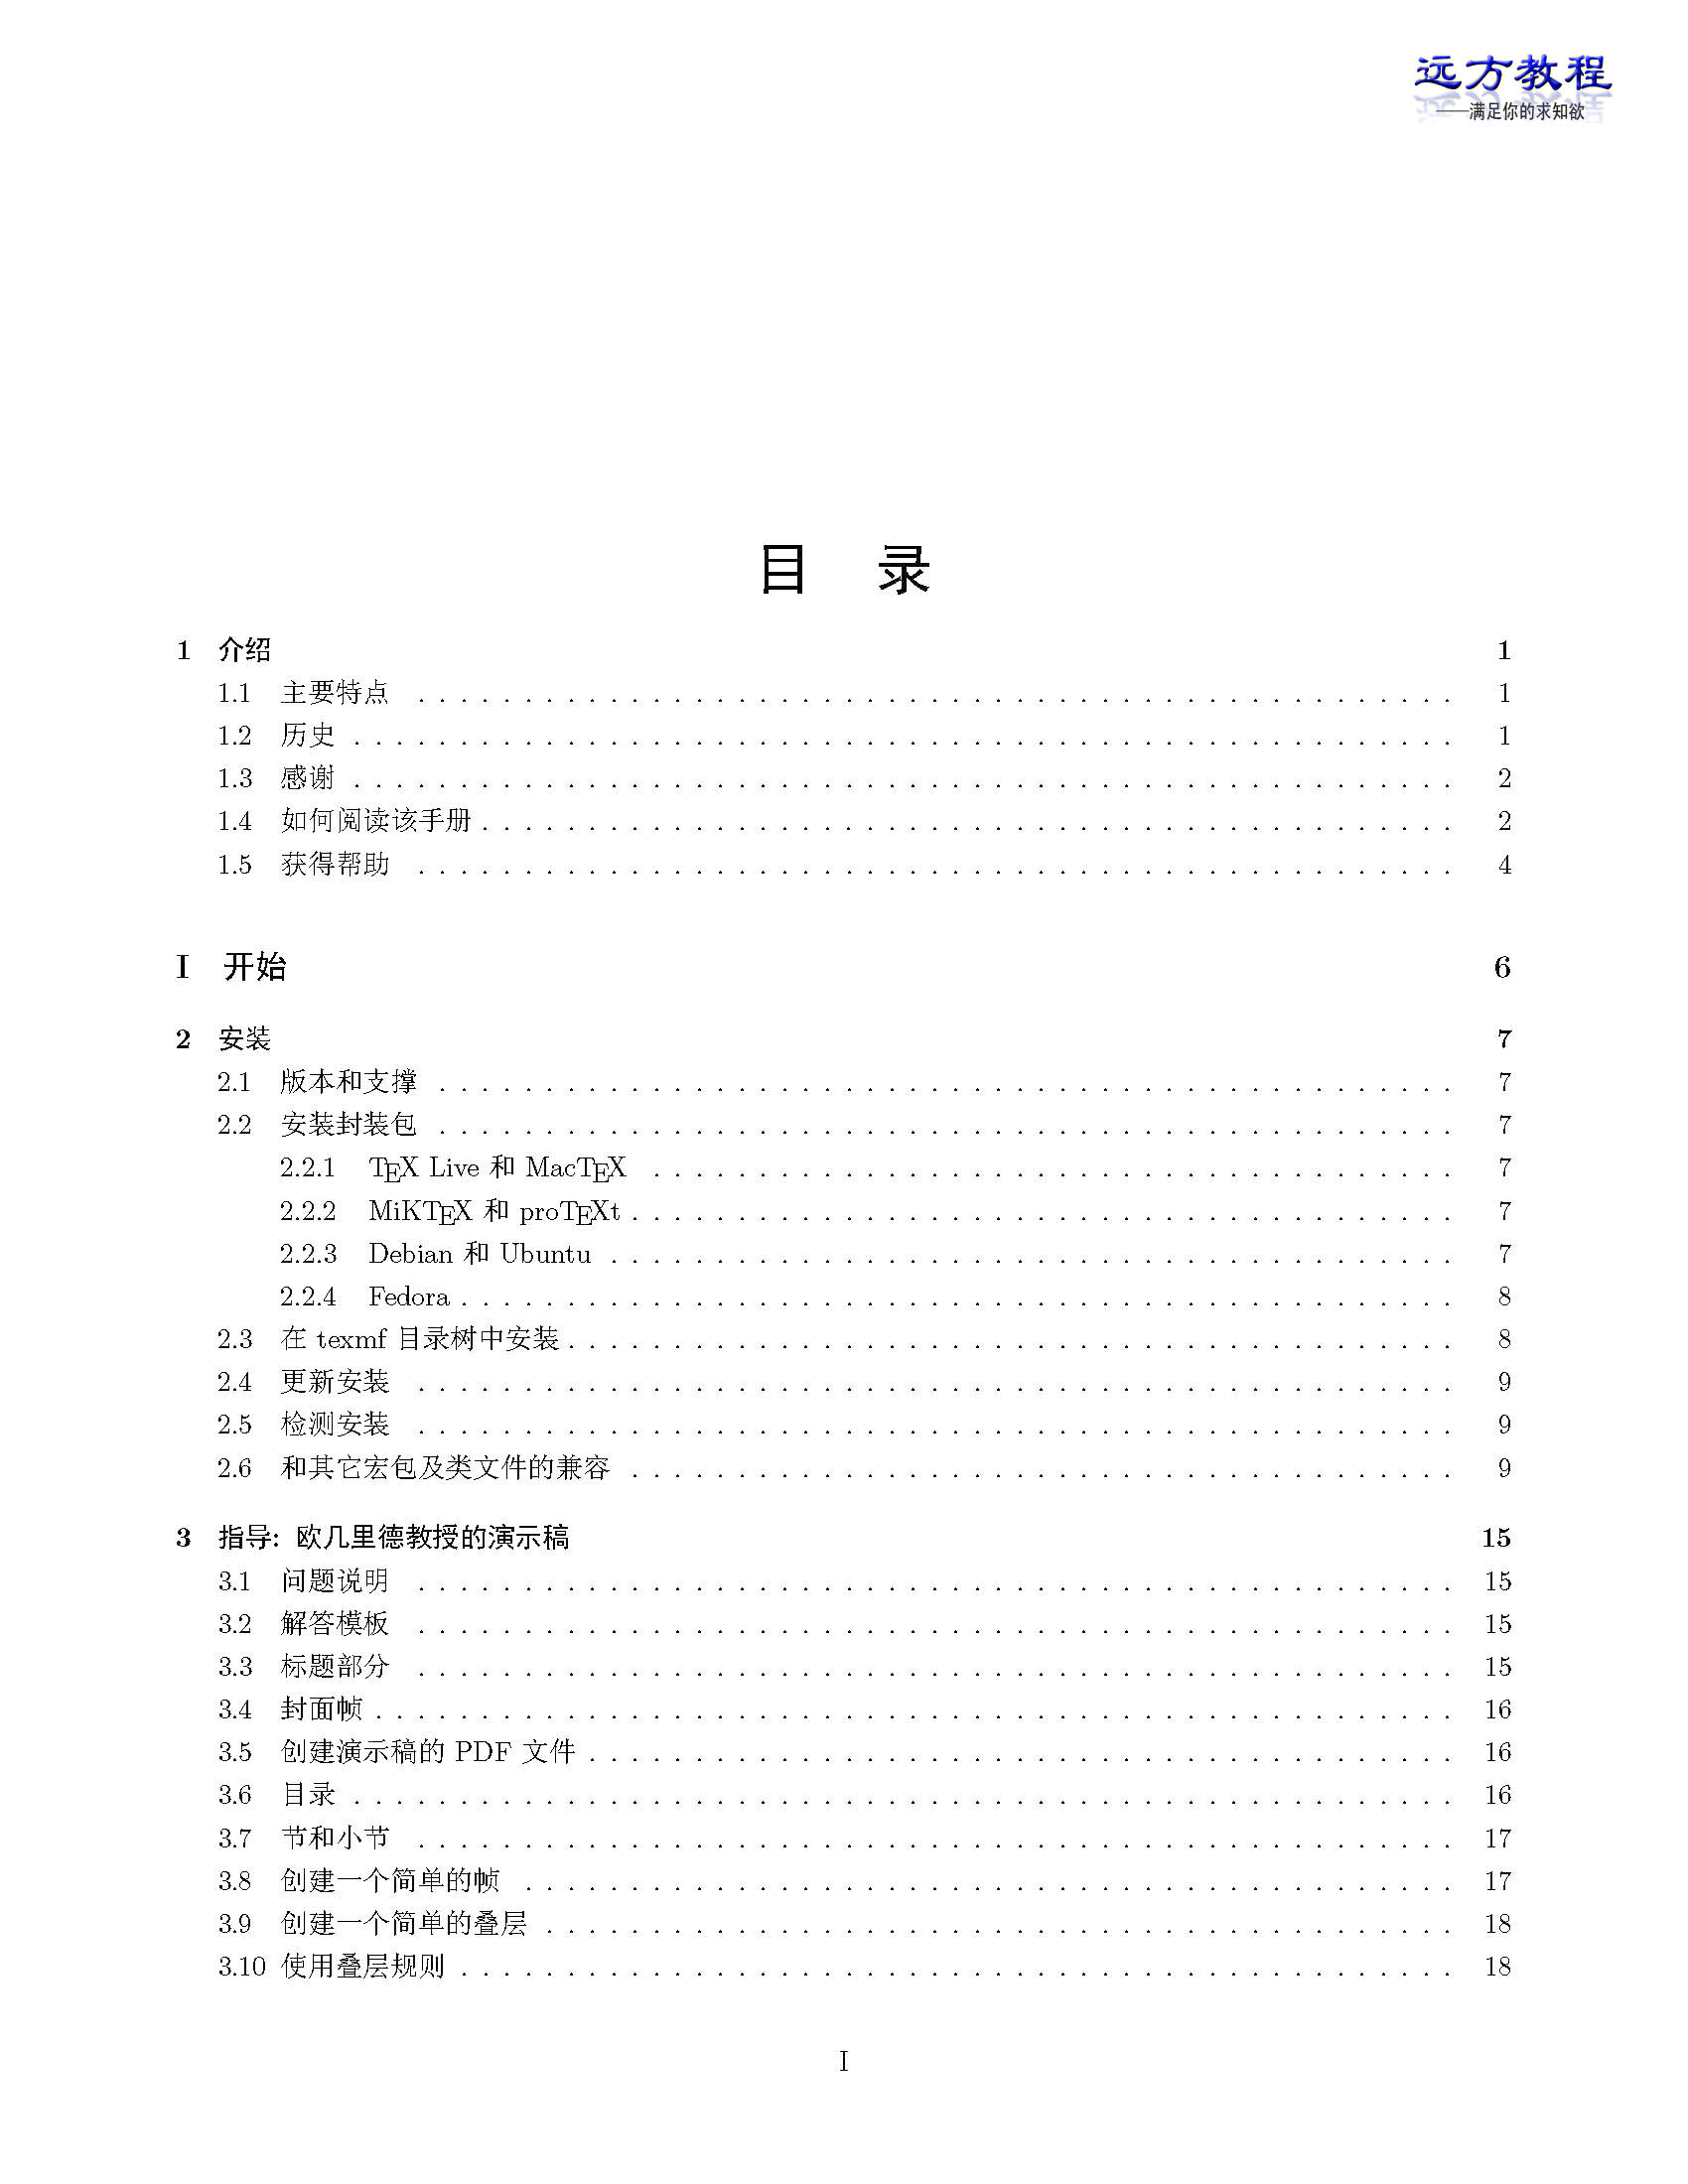 Beamer用户手册(V3.24)中译版-远方教程